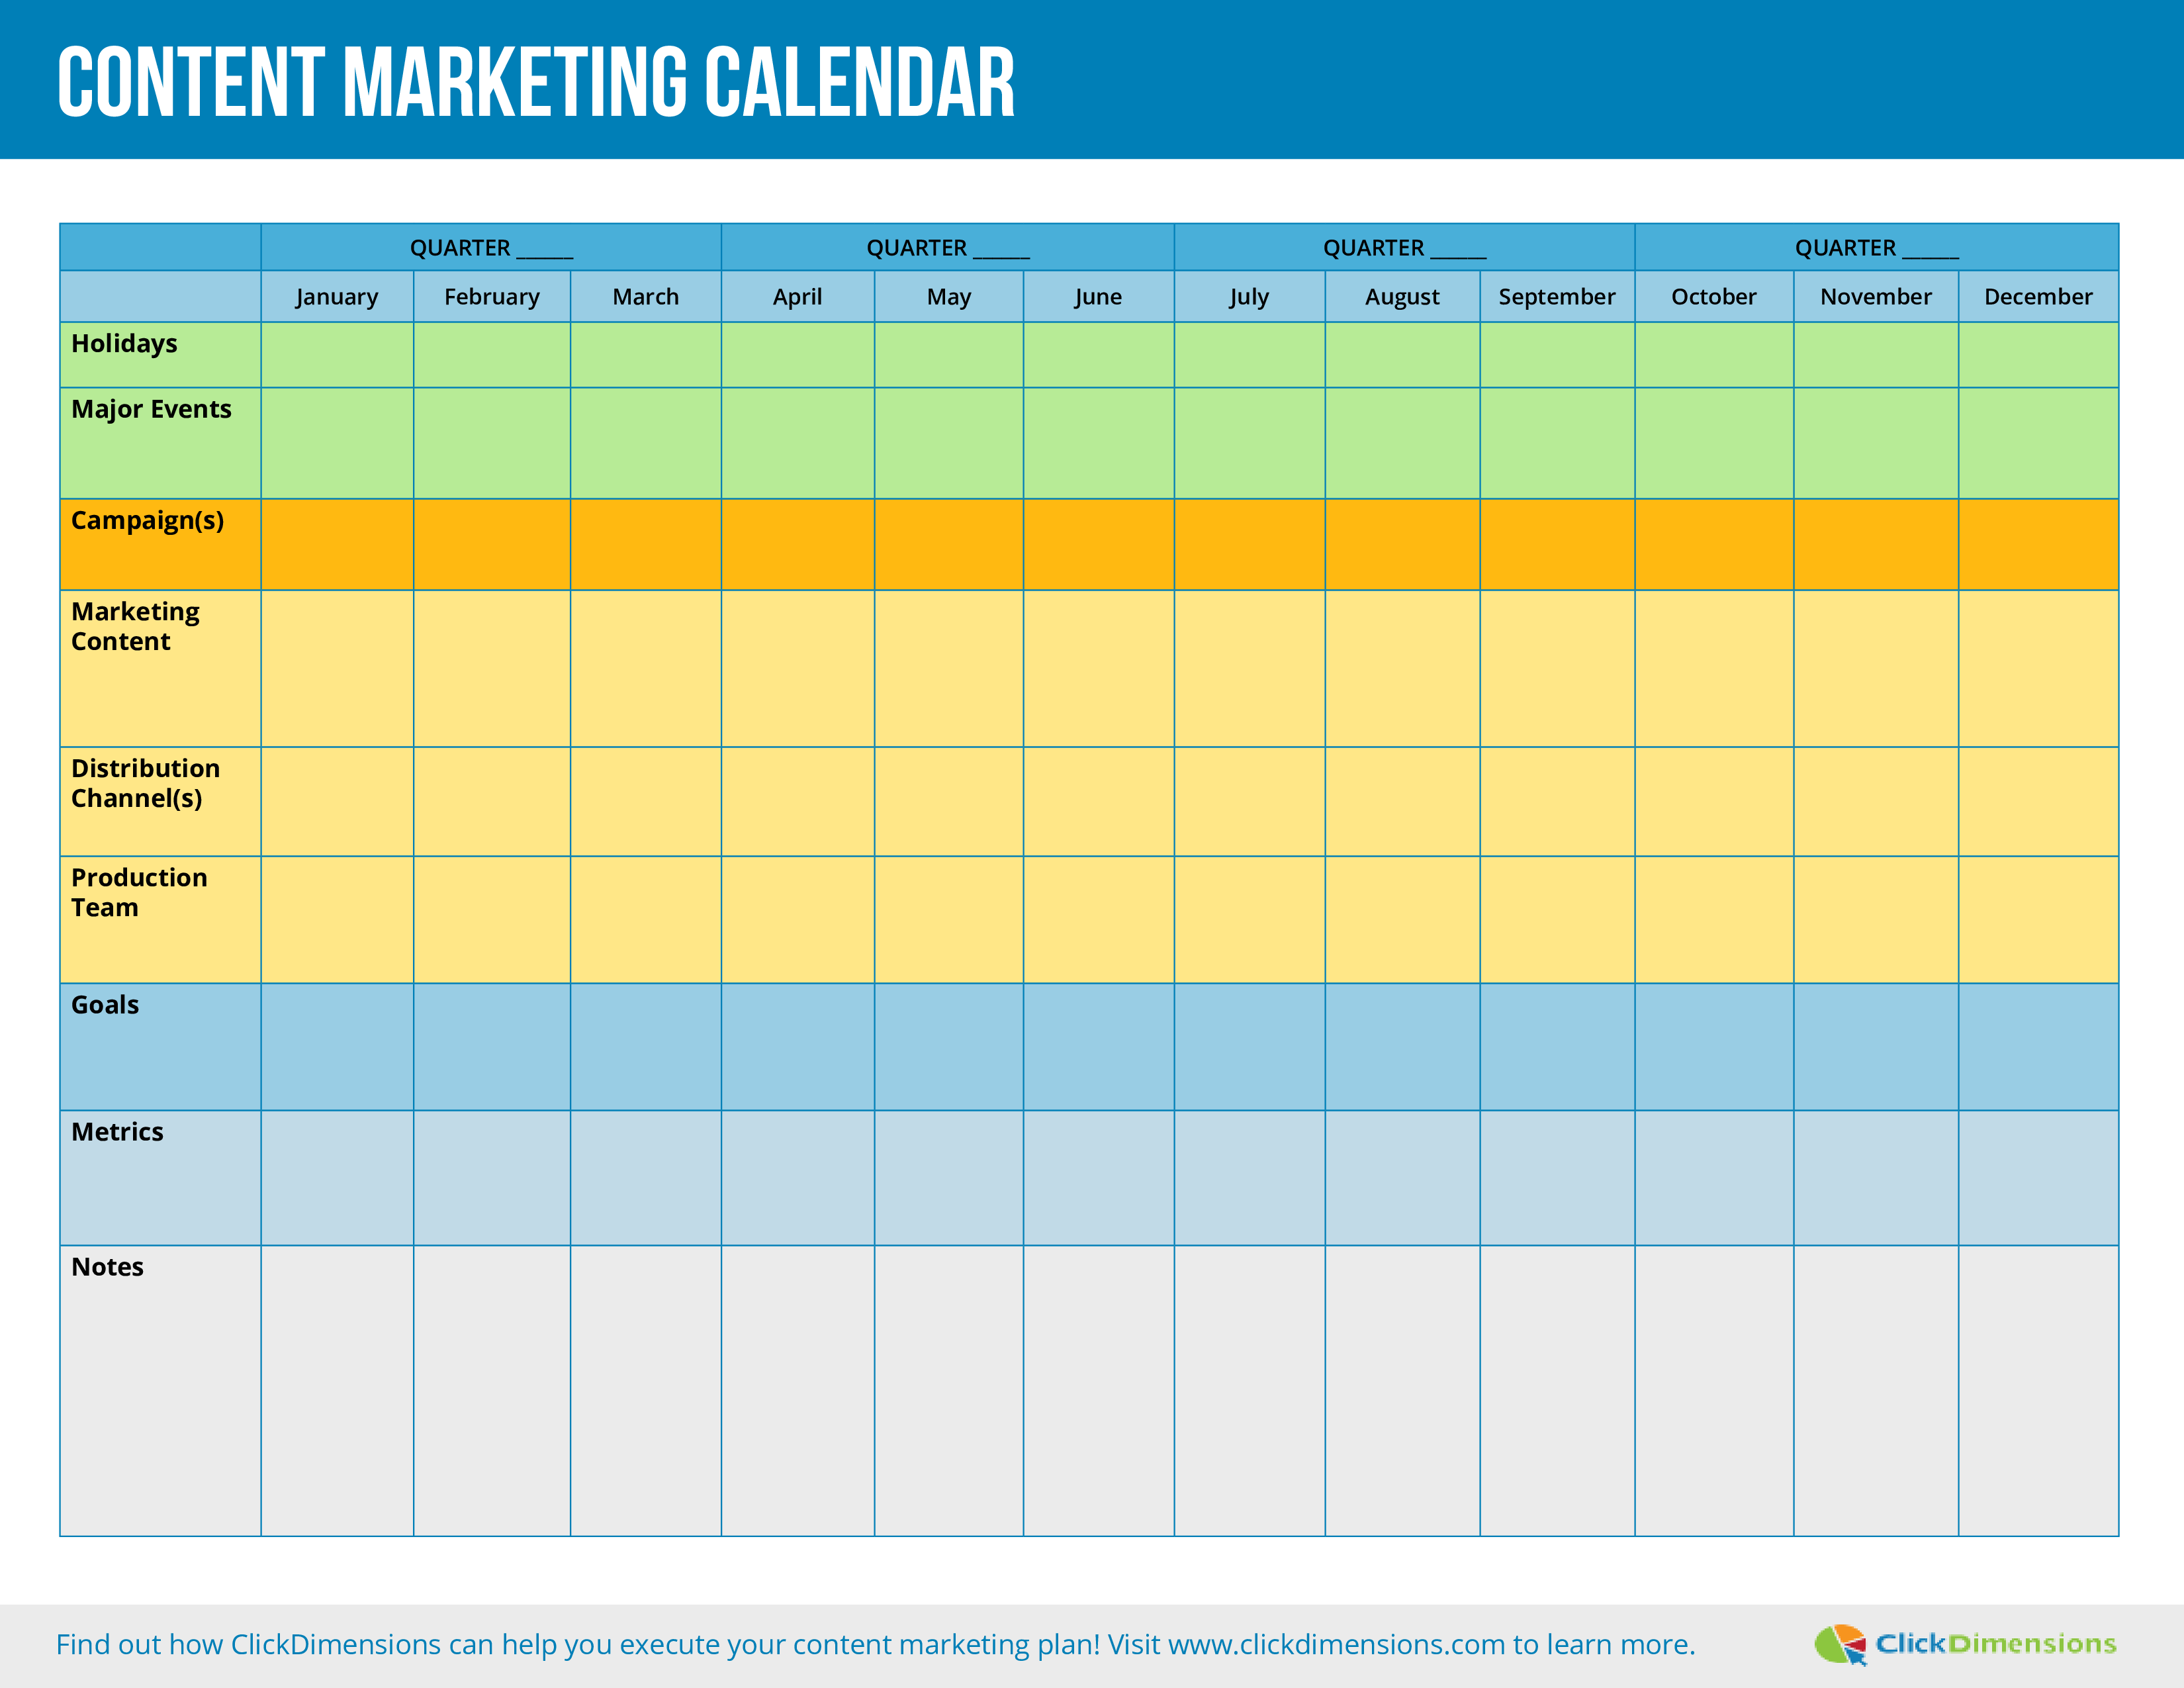 Content Marketing Calendar main image